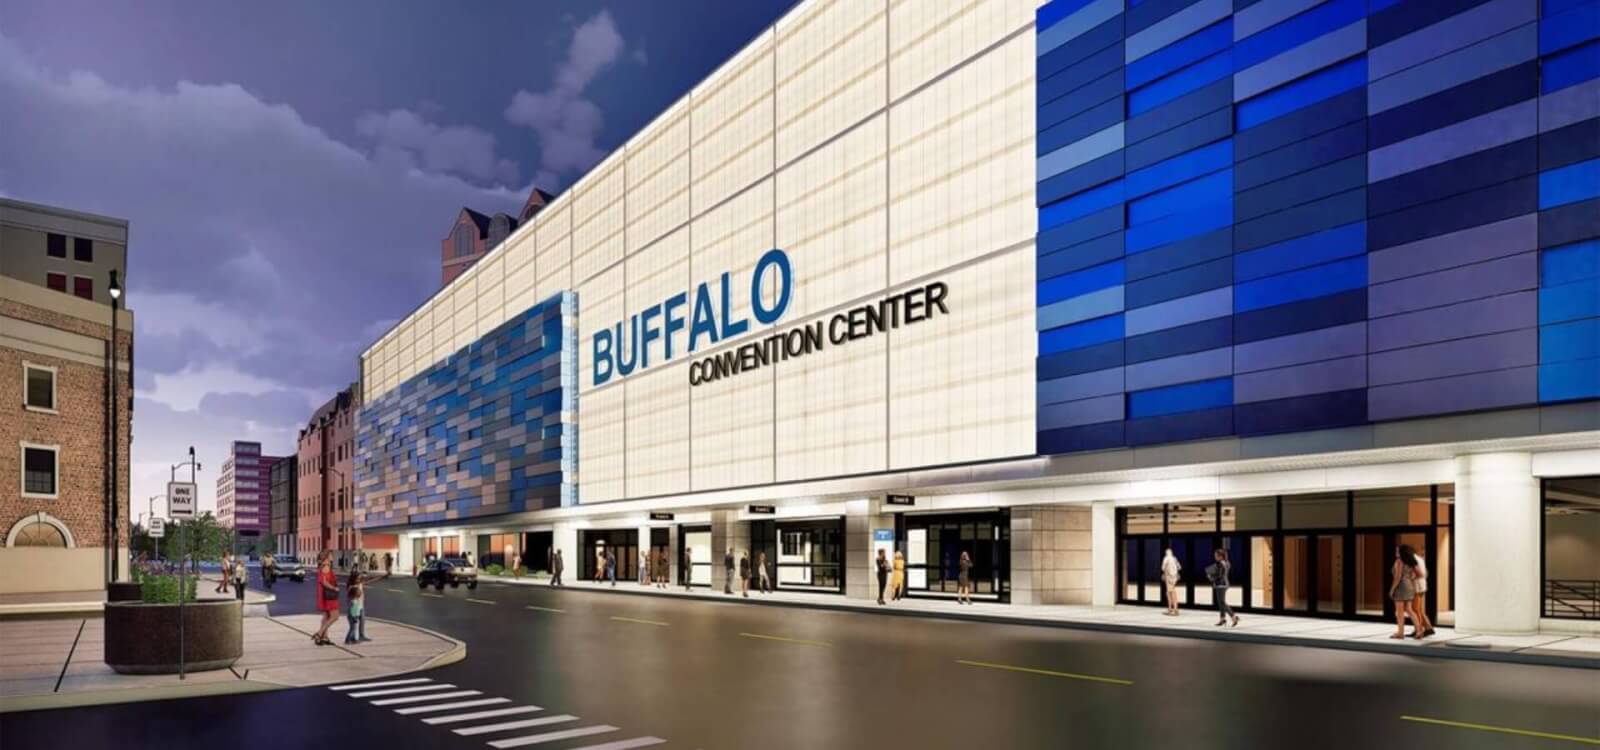 Pedestrians walk along the blue and white exterior of the Buffalo Convention Center in Buffalo, NY